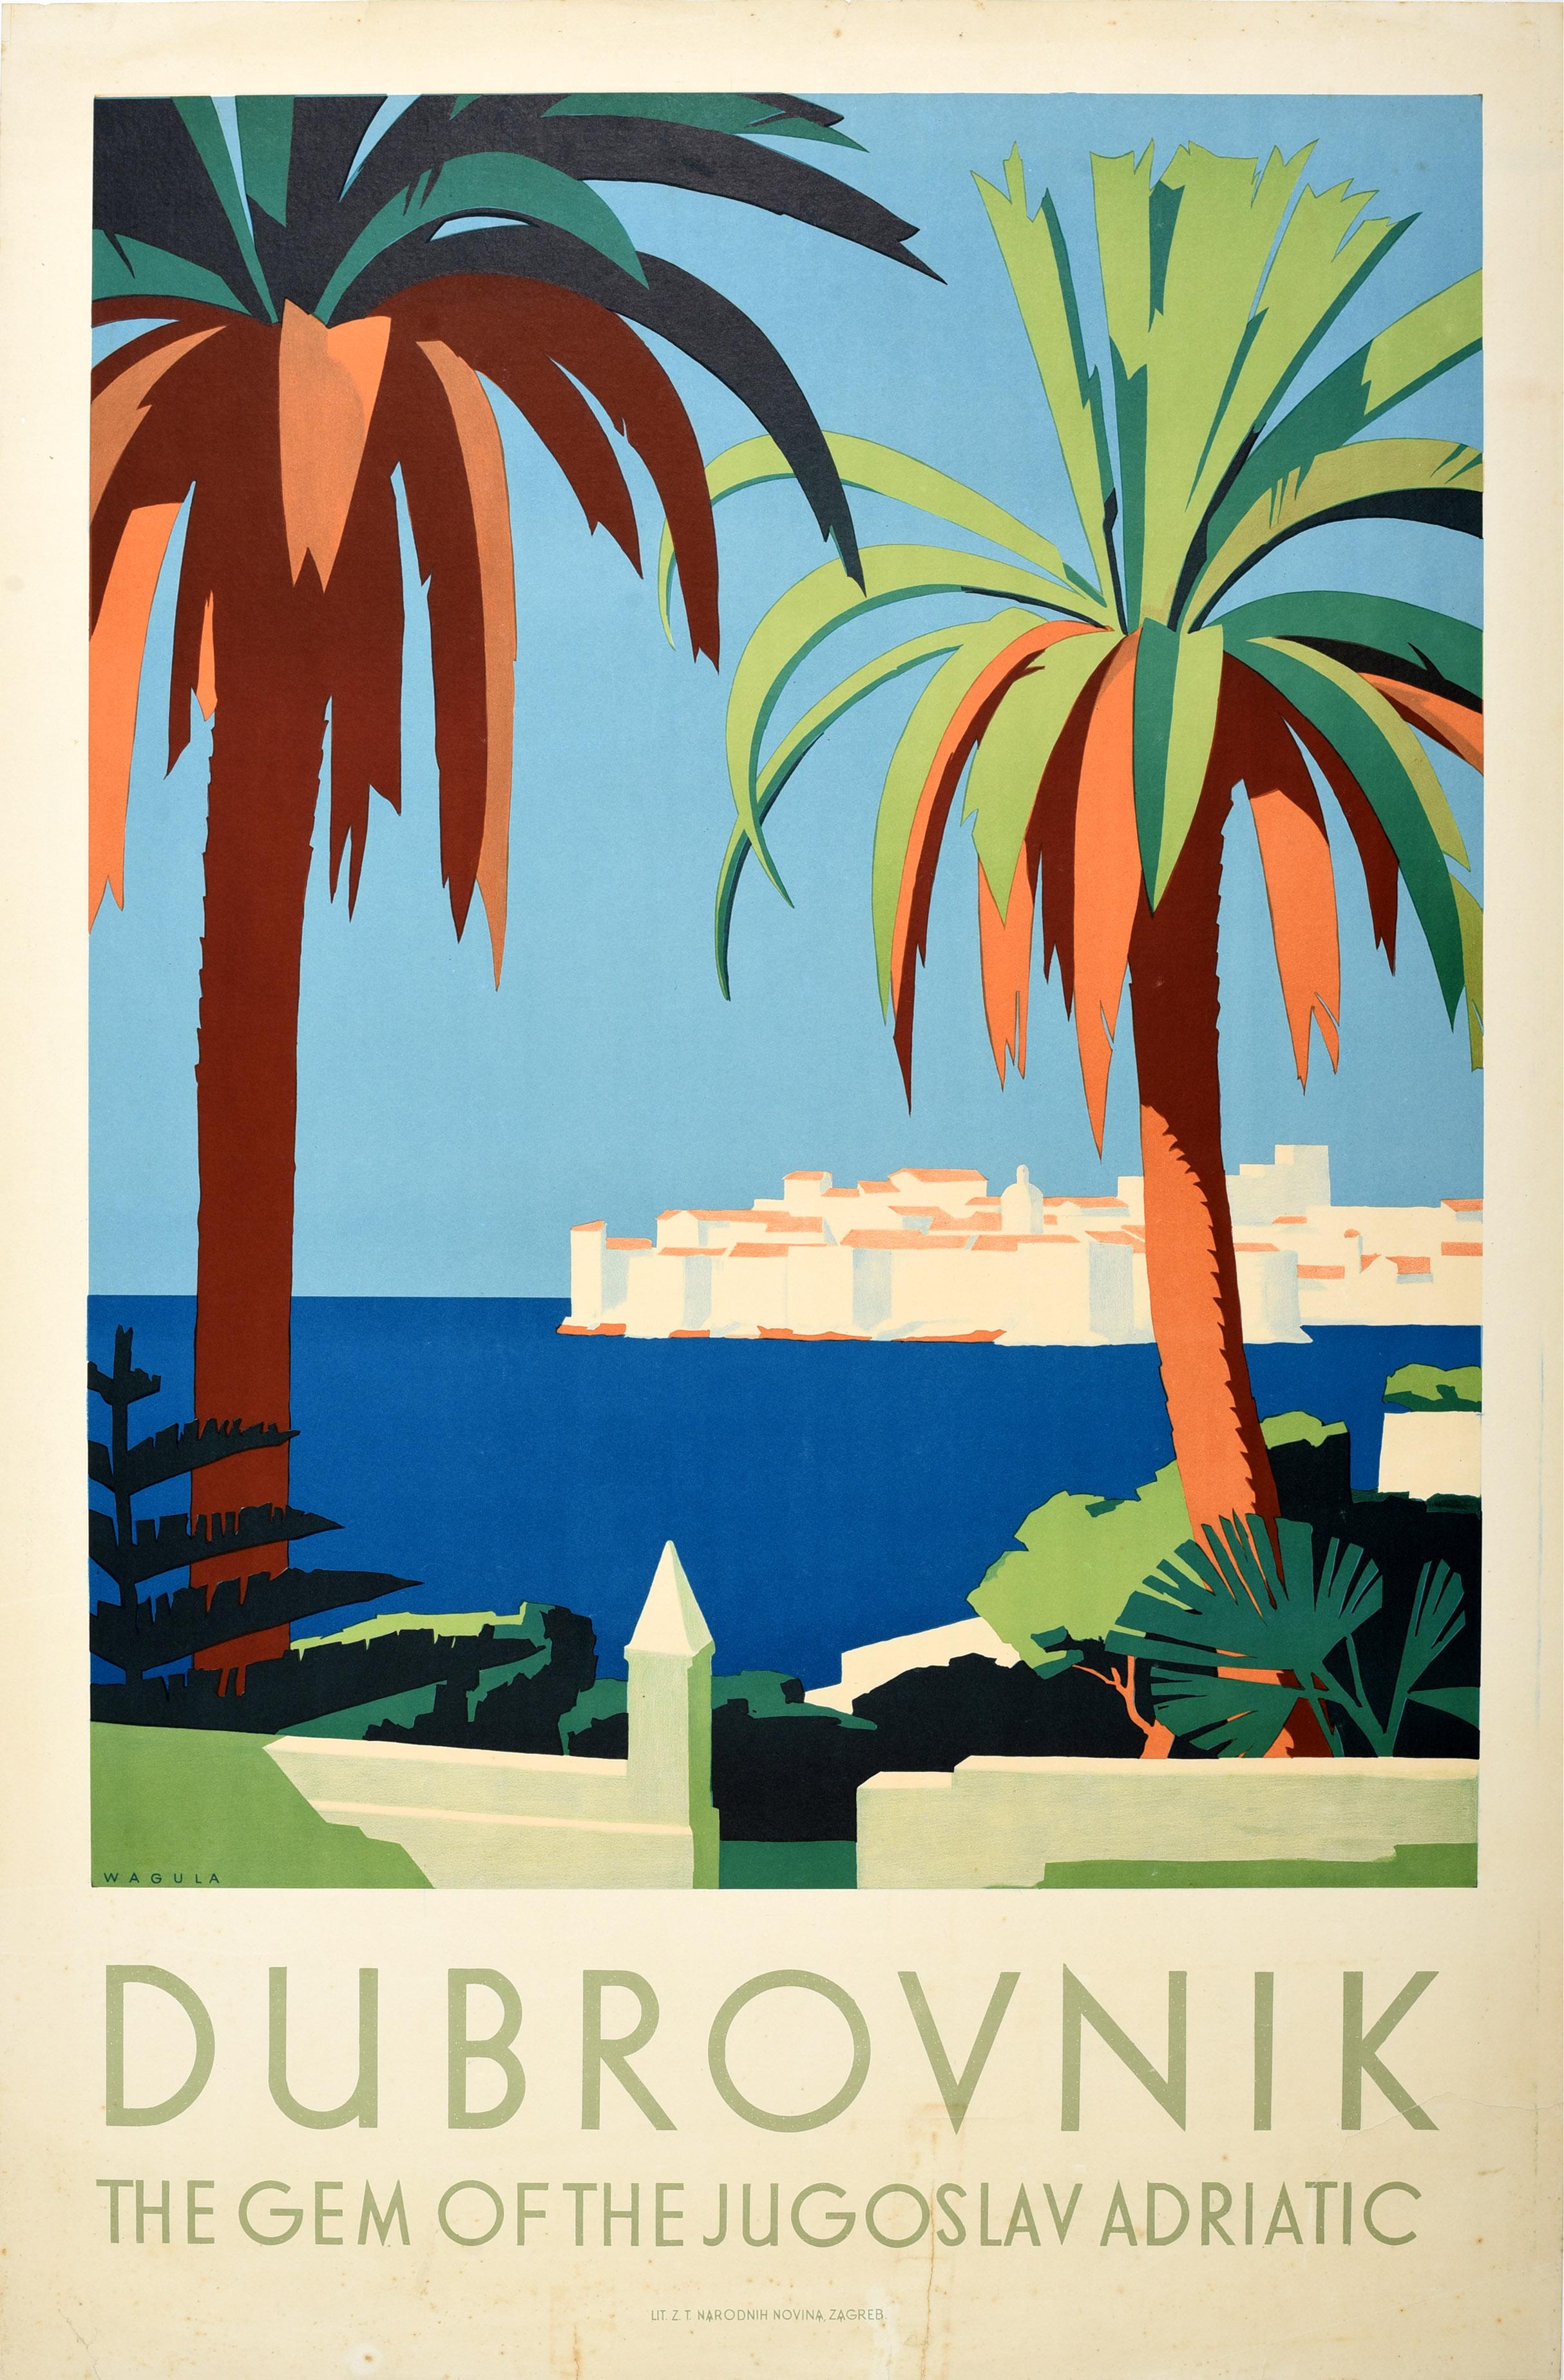 Hans Wagula Print - Original Vintage Travel Poster Dubrovnik Gem Of The Jugoslav Adriatic Sea City